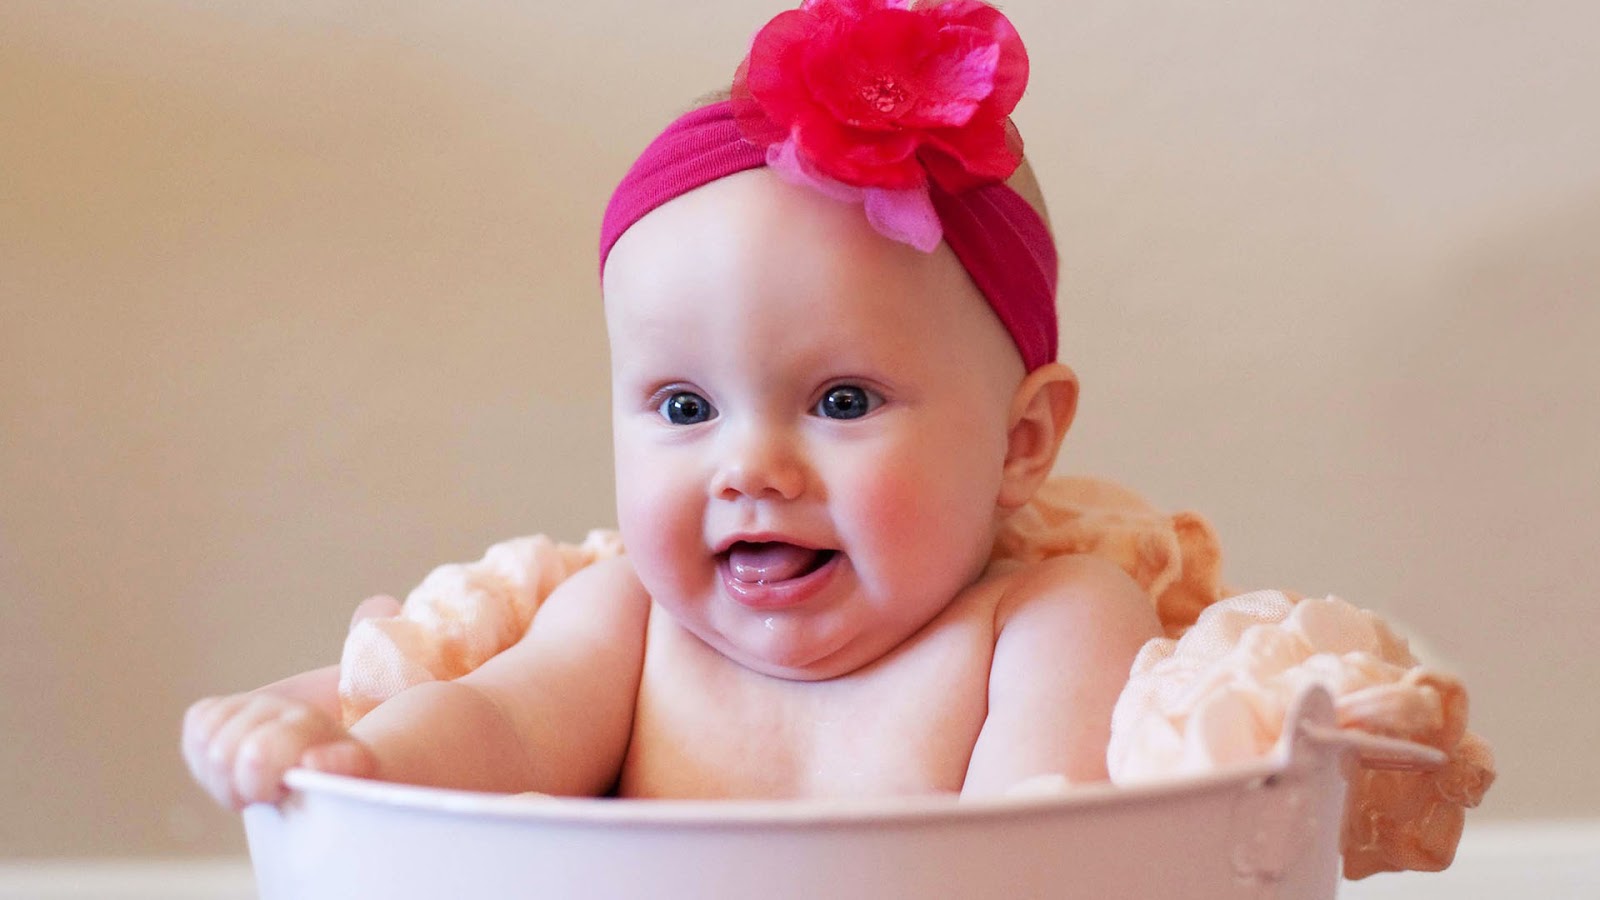 Baby HD Wallpaper Cute Image Child